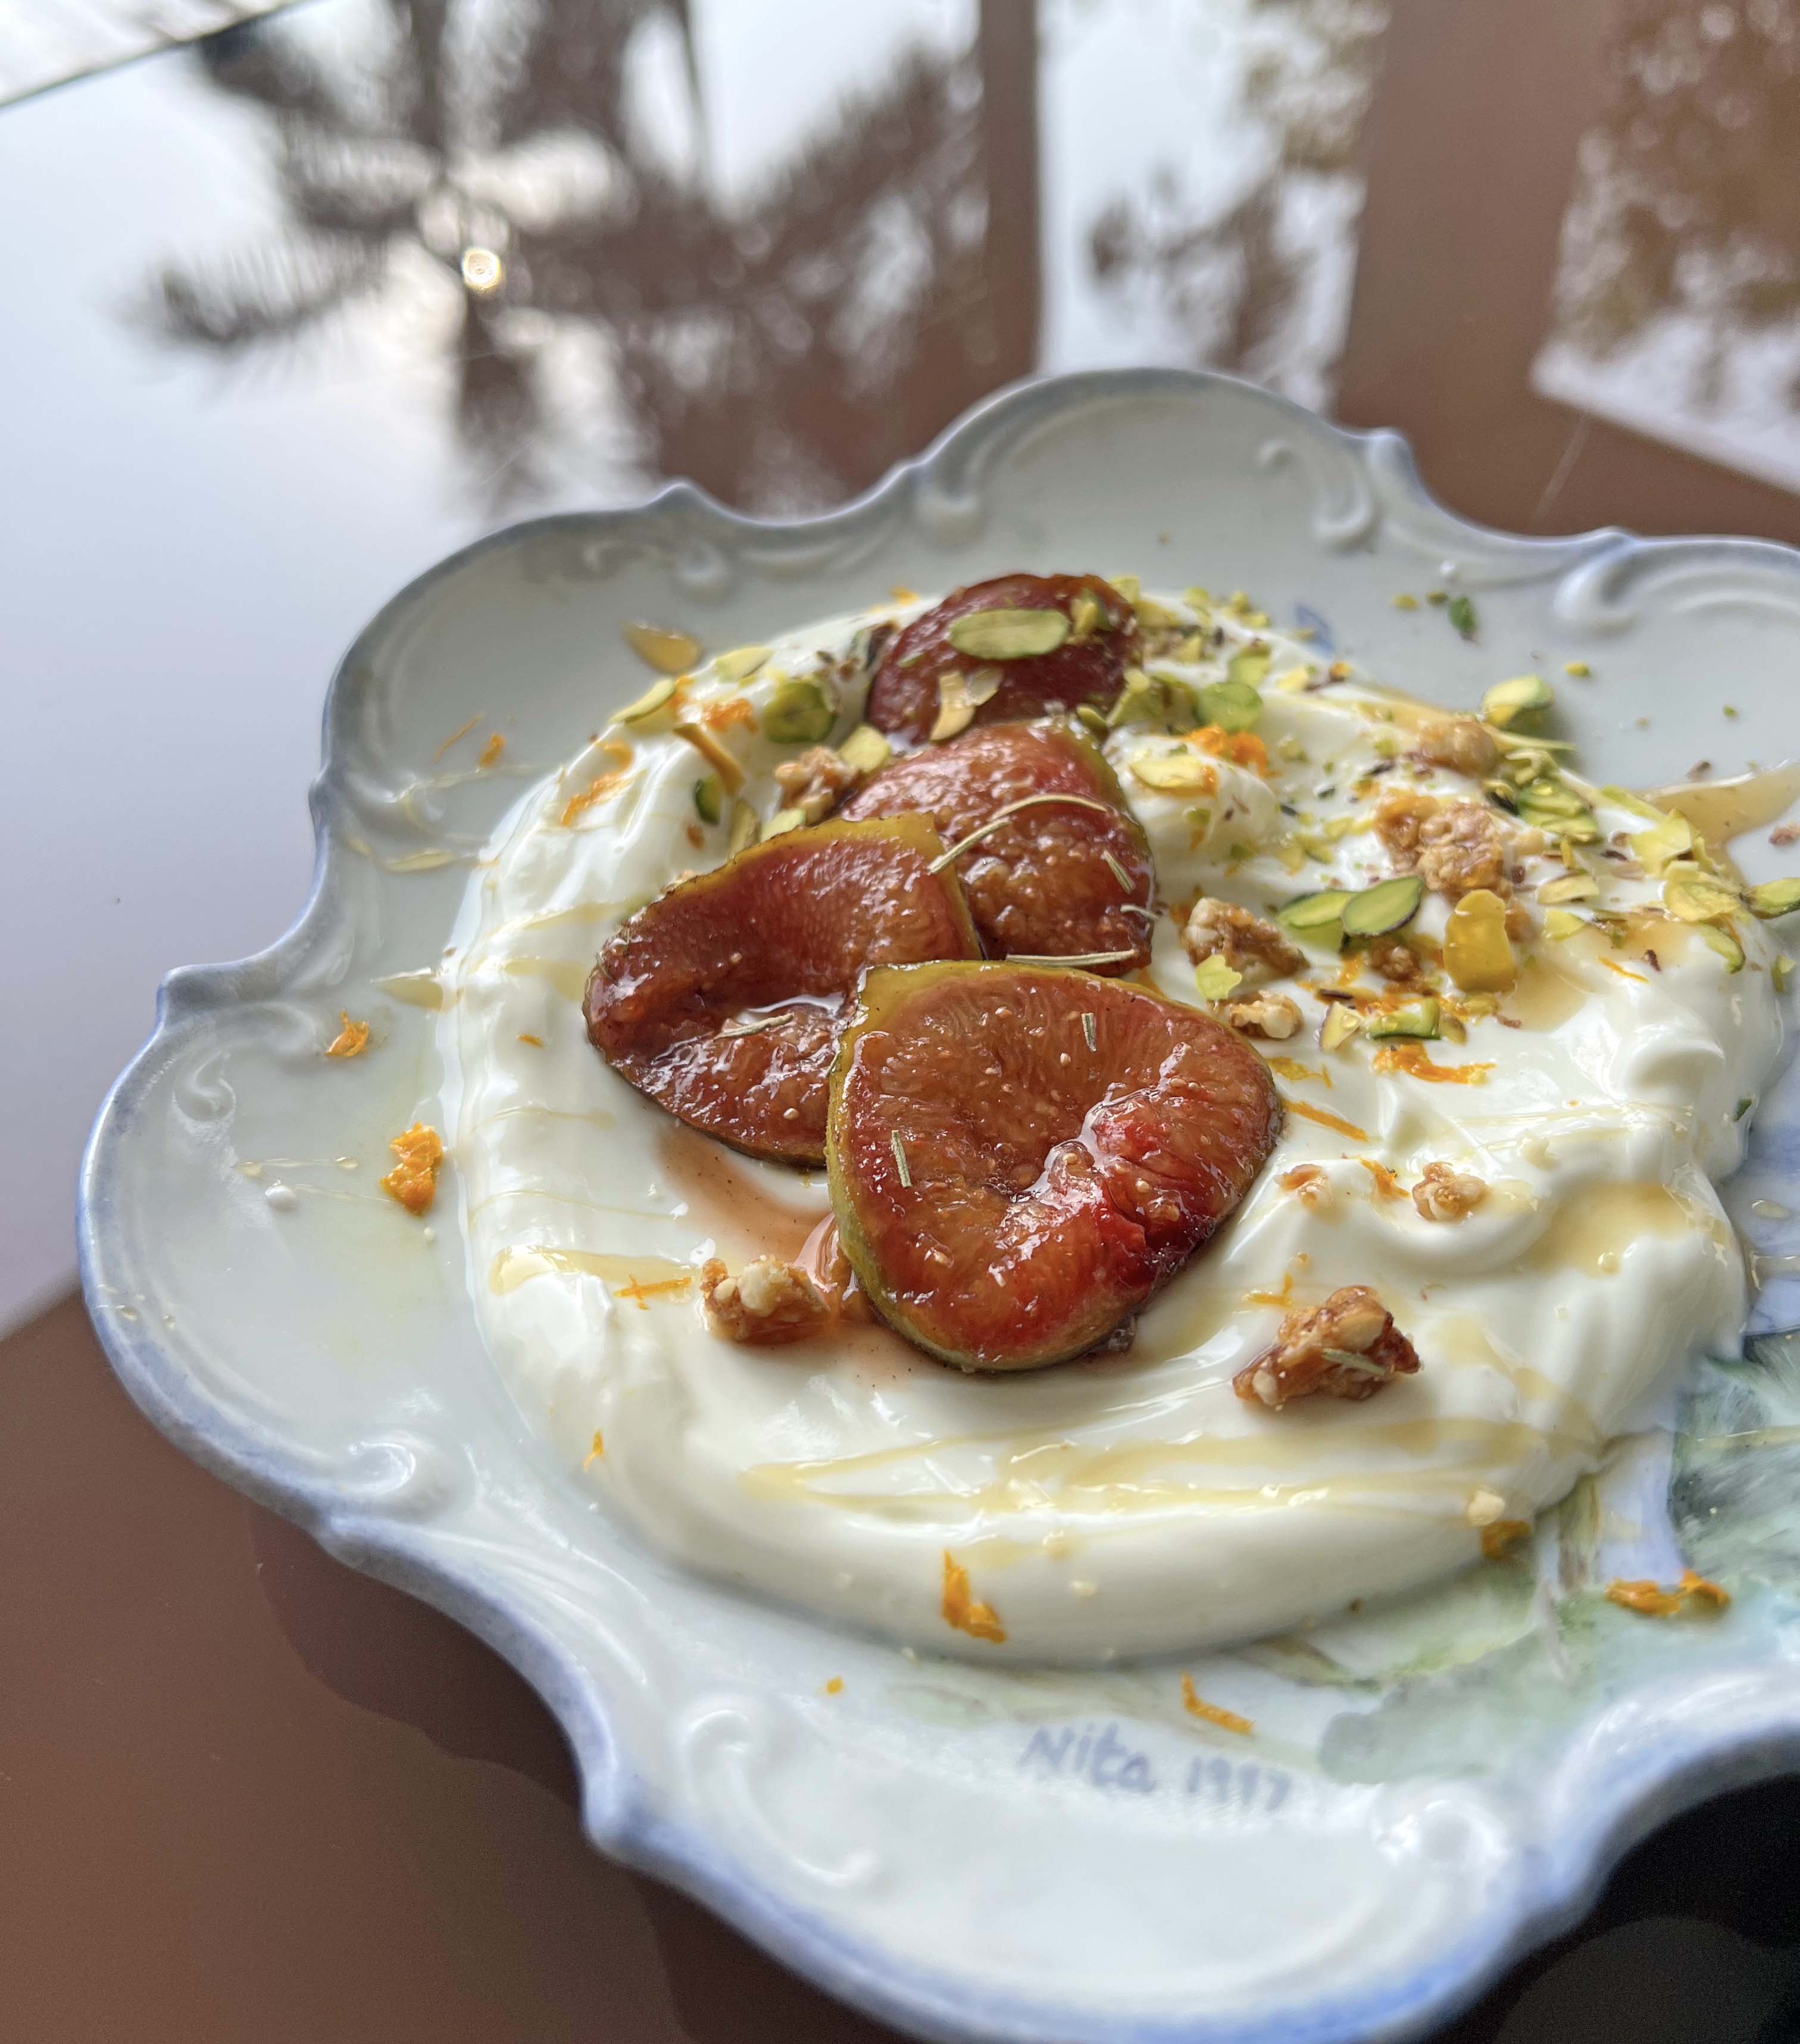 Grilled figs with yoghurt dessert